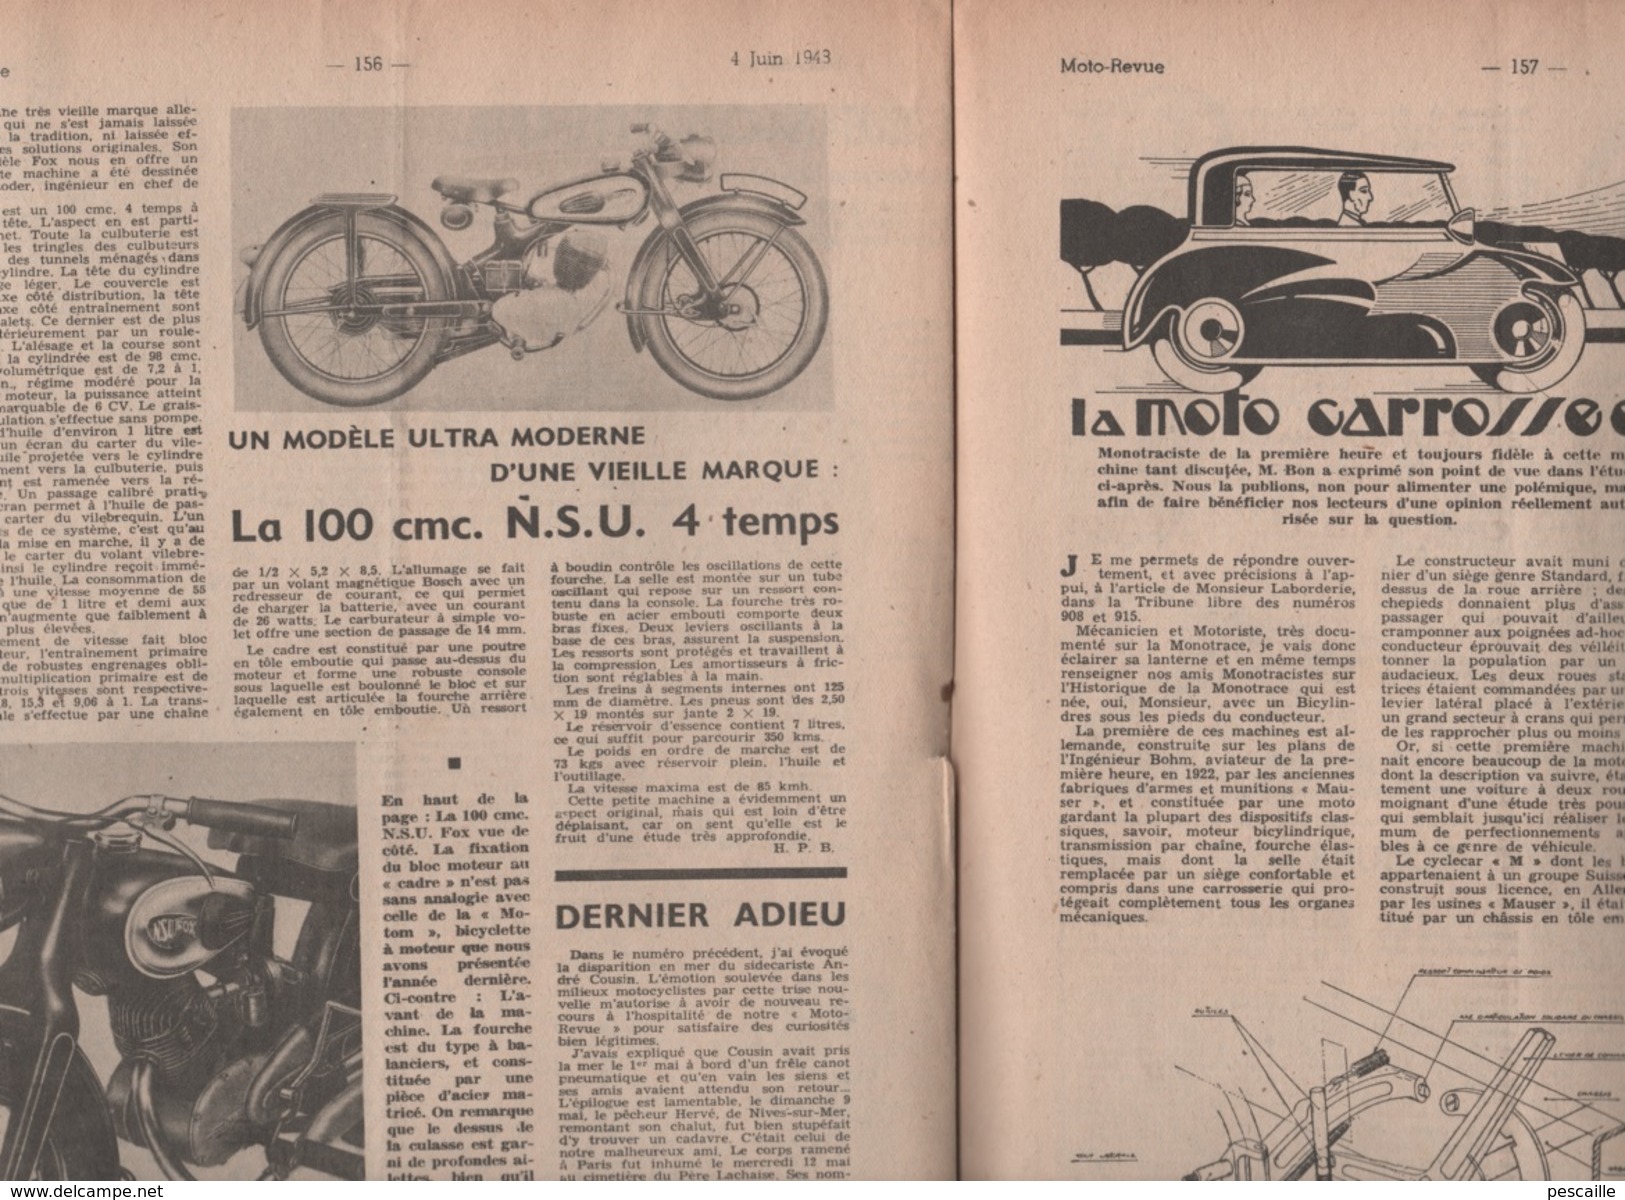 MOTO REVUE 4 06 1948 - MOTO-CROSS DE MONTREUIL - CULASSE DE MOTO - BOL D'OR - MOTO CARROSSEE - RACER 500 -